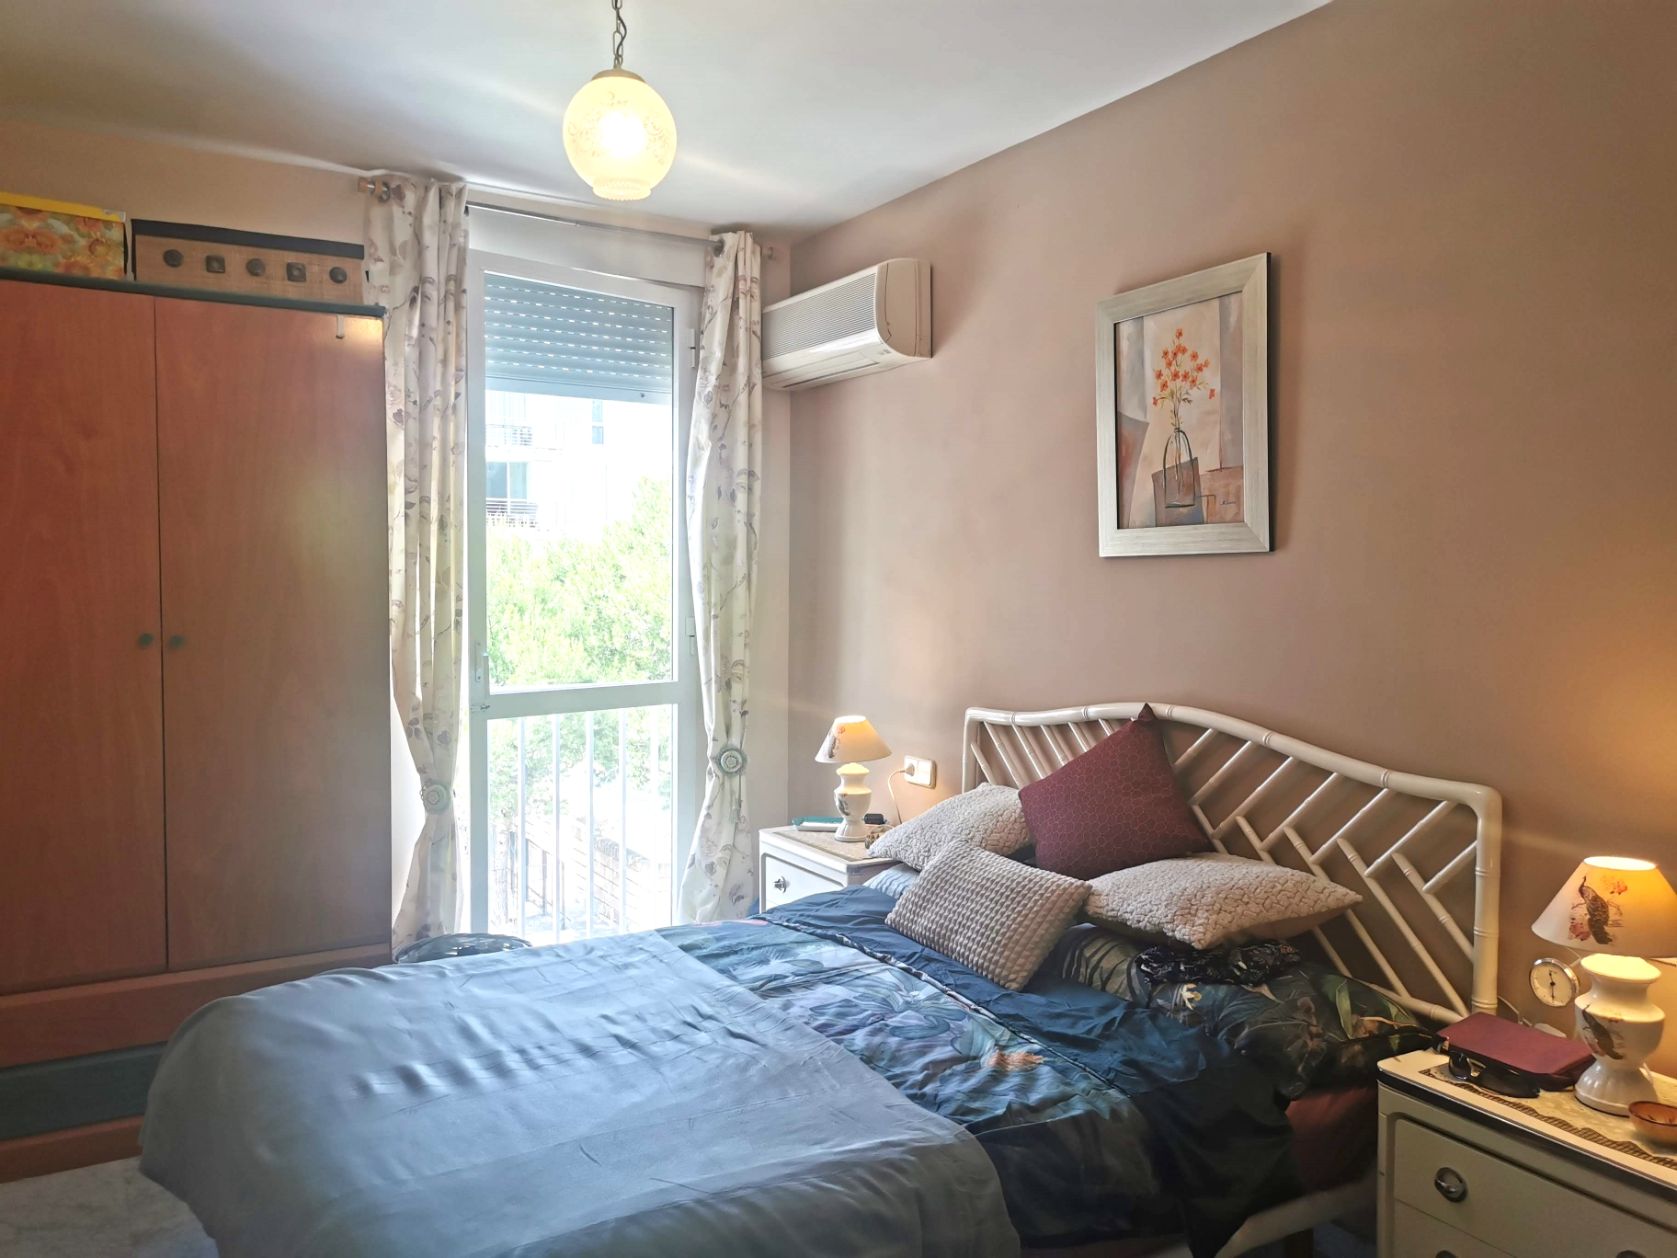 3 bedroom apartment for sale in Puerto Pollensa Mallorca